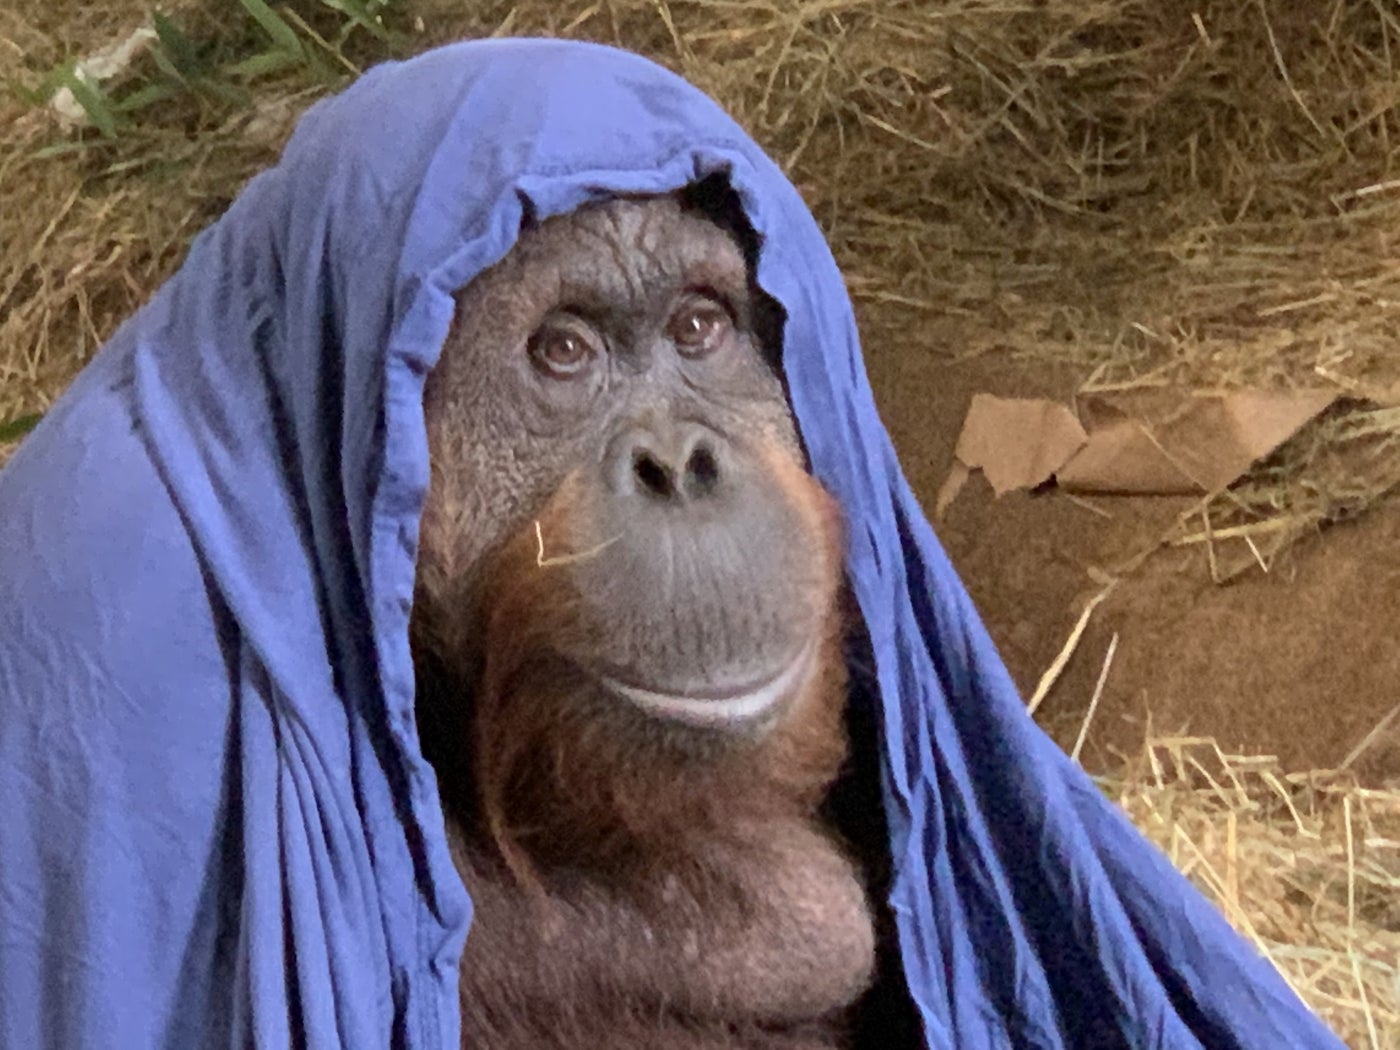 Orangutan Lucy in a blanket.